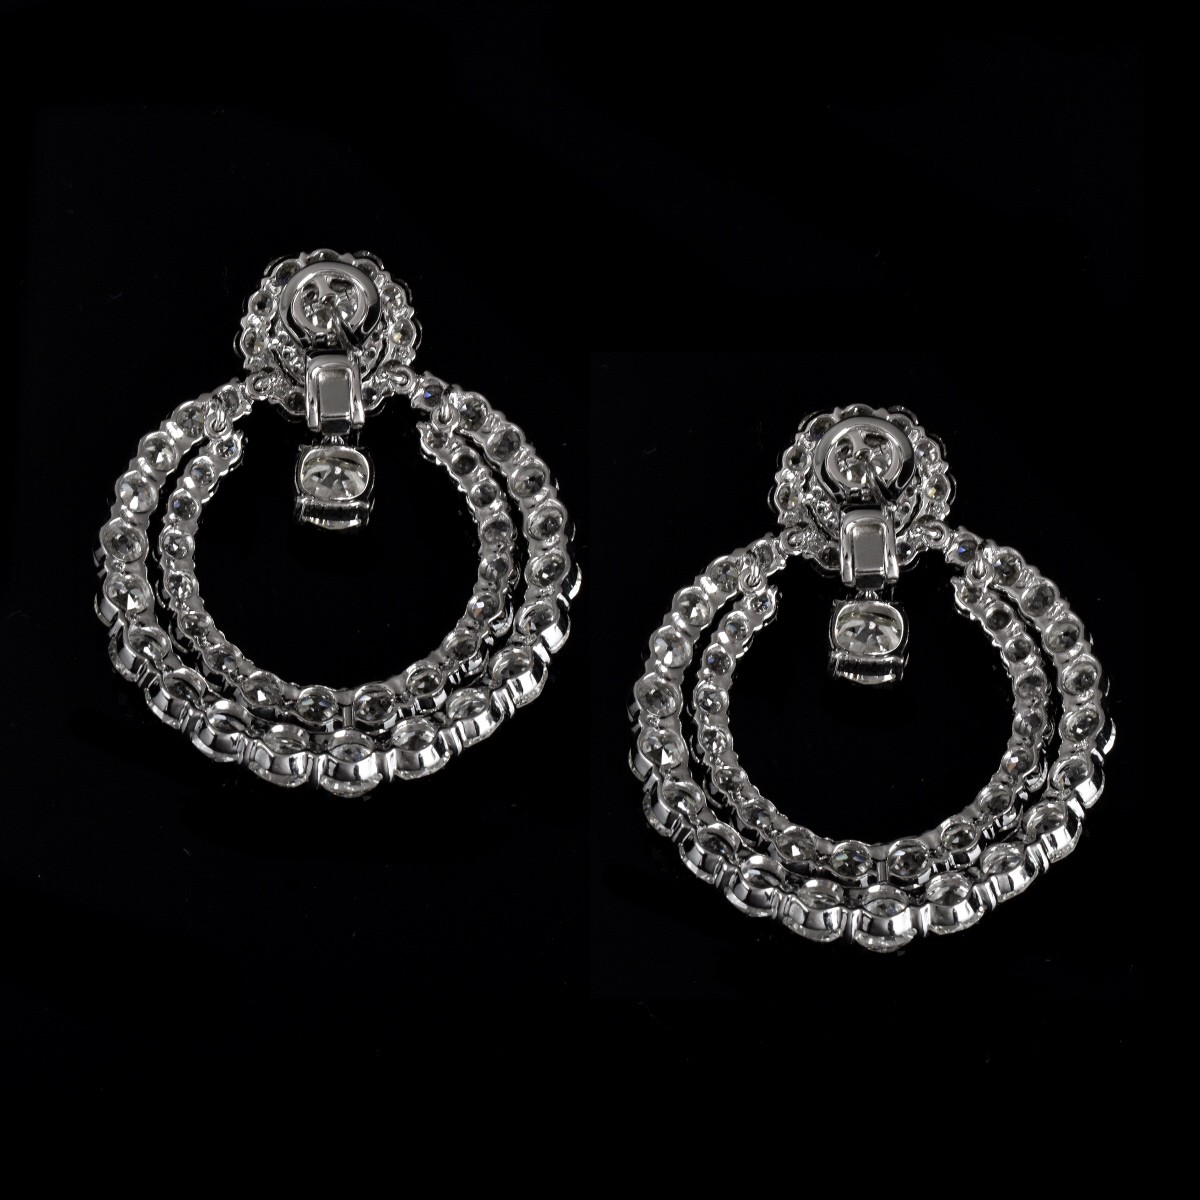 Diamond and Platinum Earrings